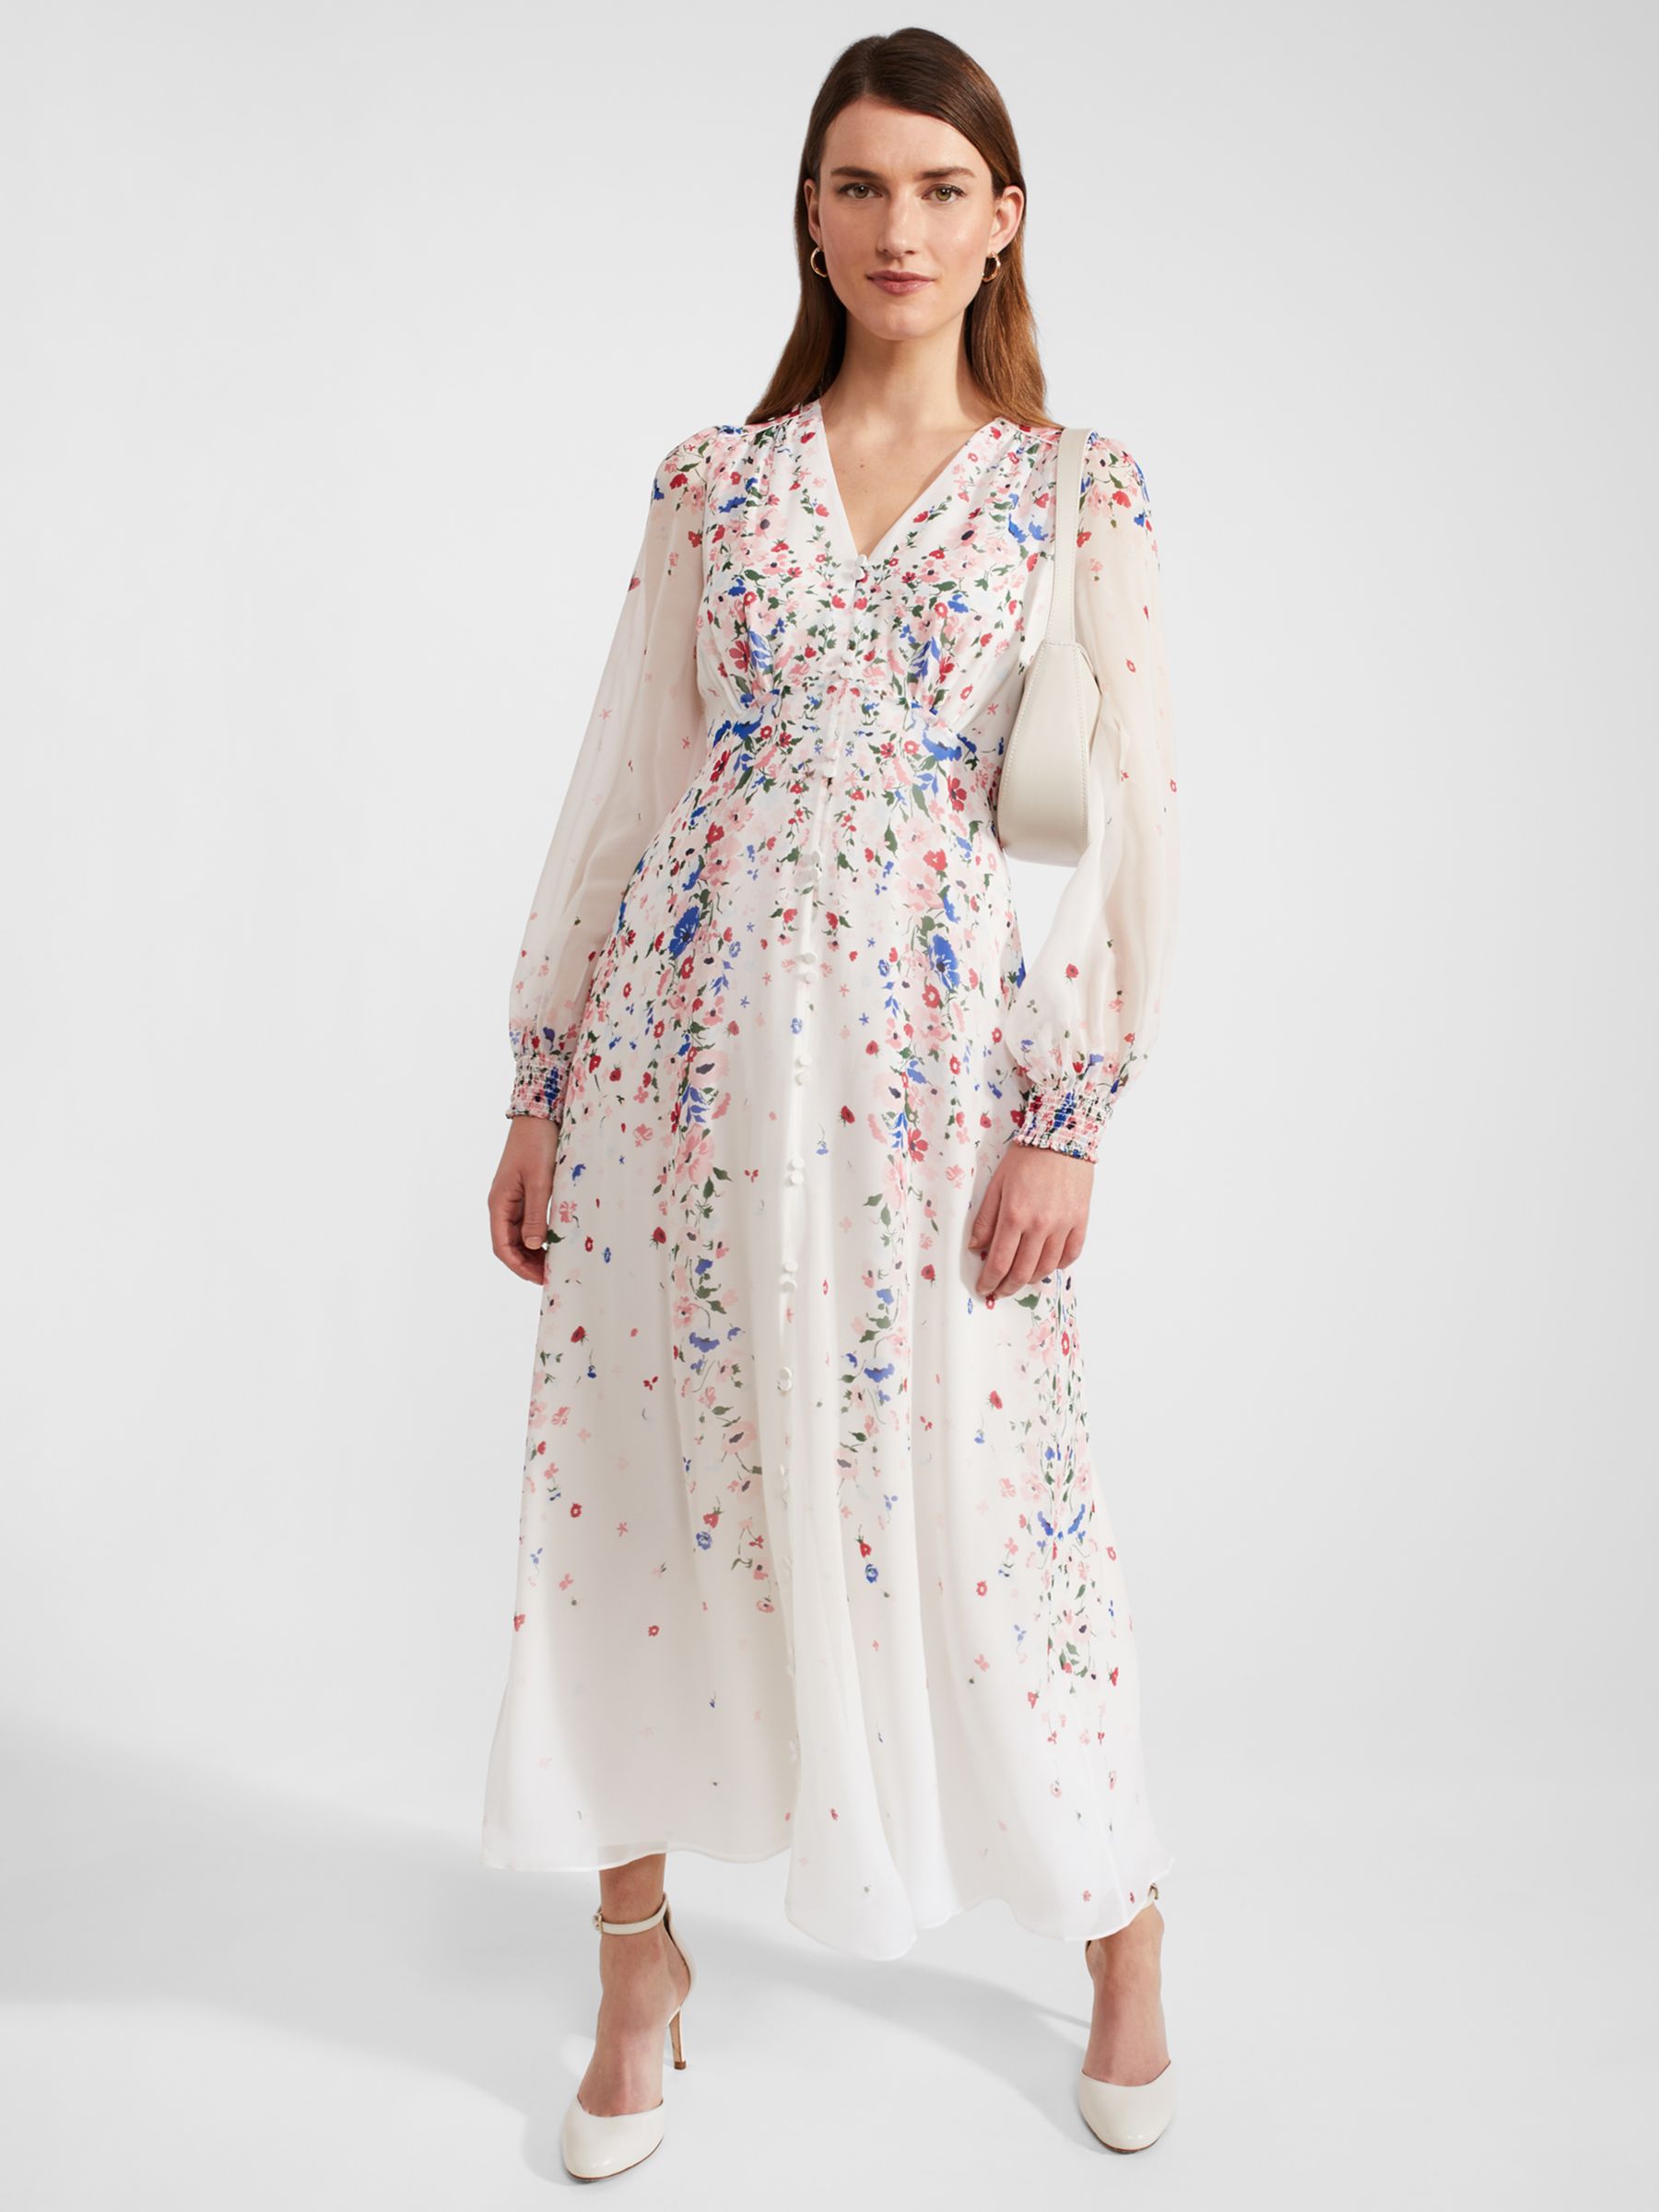 Hobbs Asher Floral Silk Maxi Dress, Ivory/Multi, 10